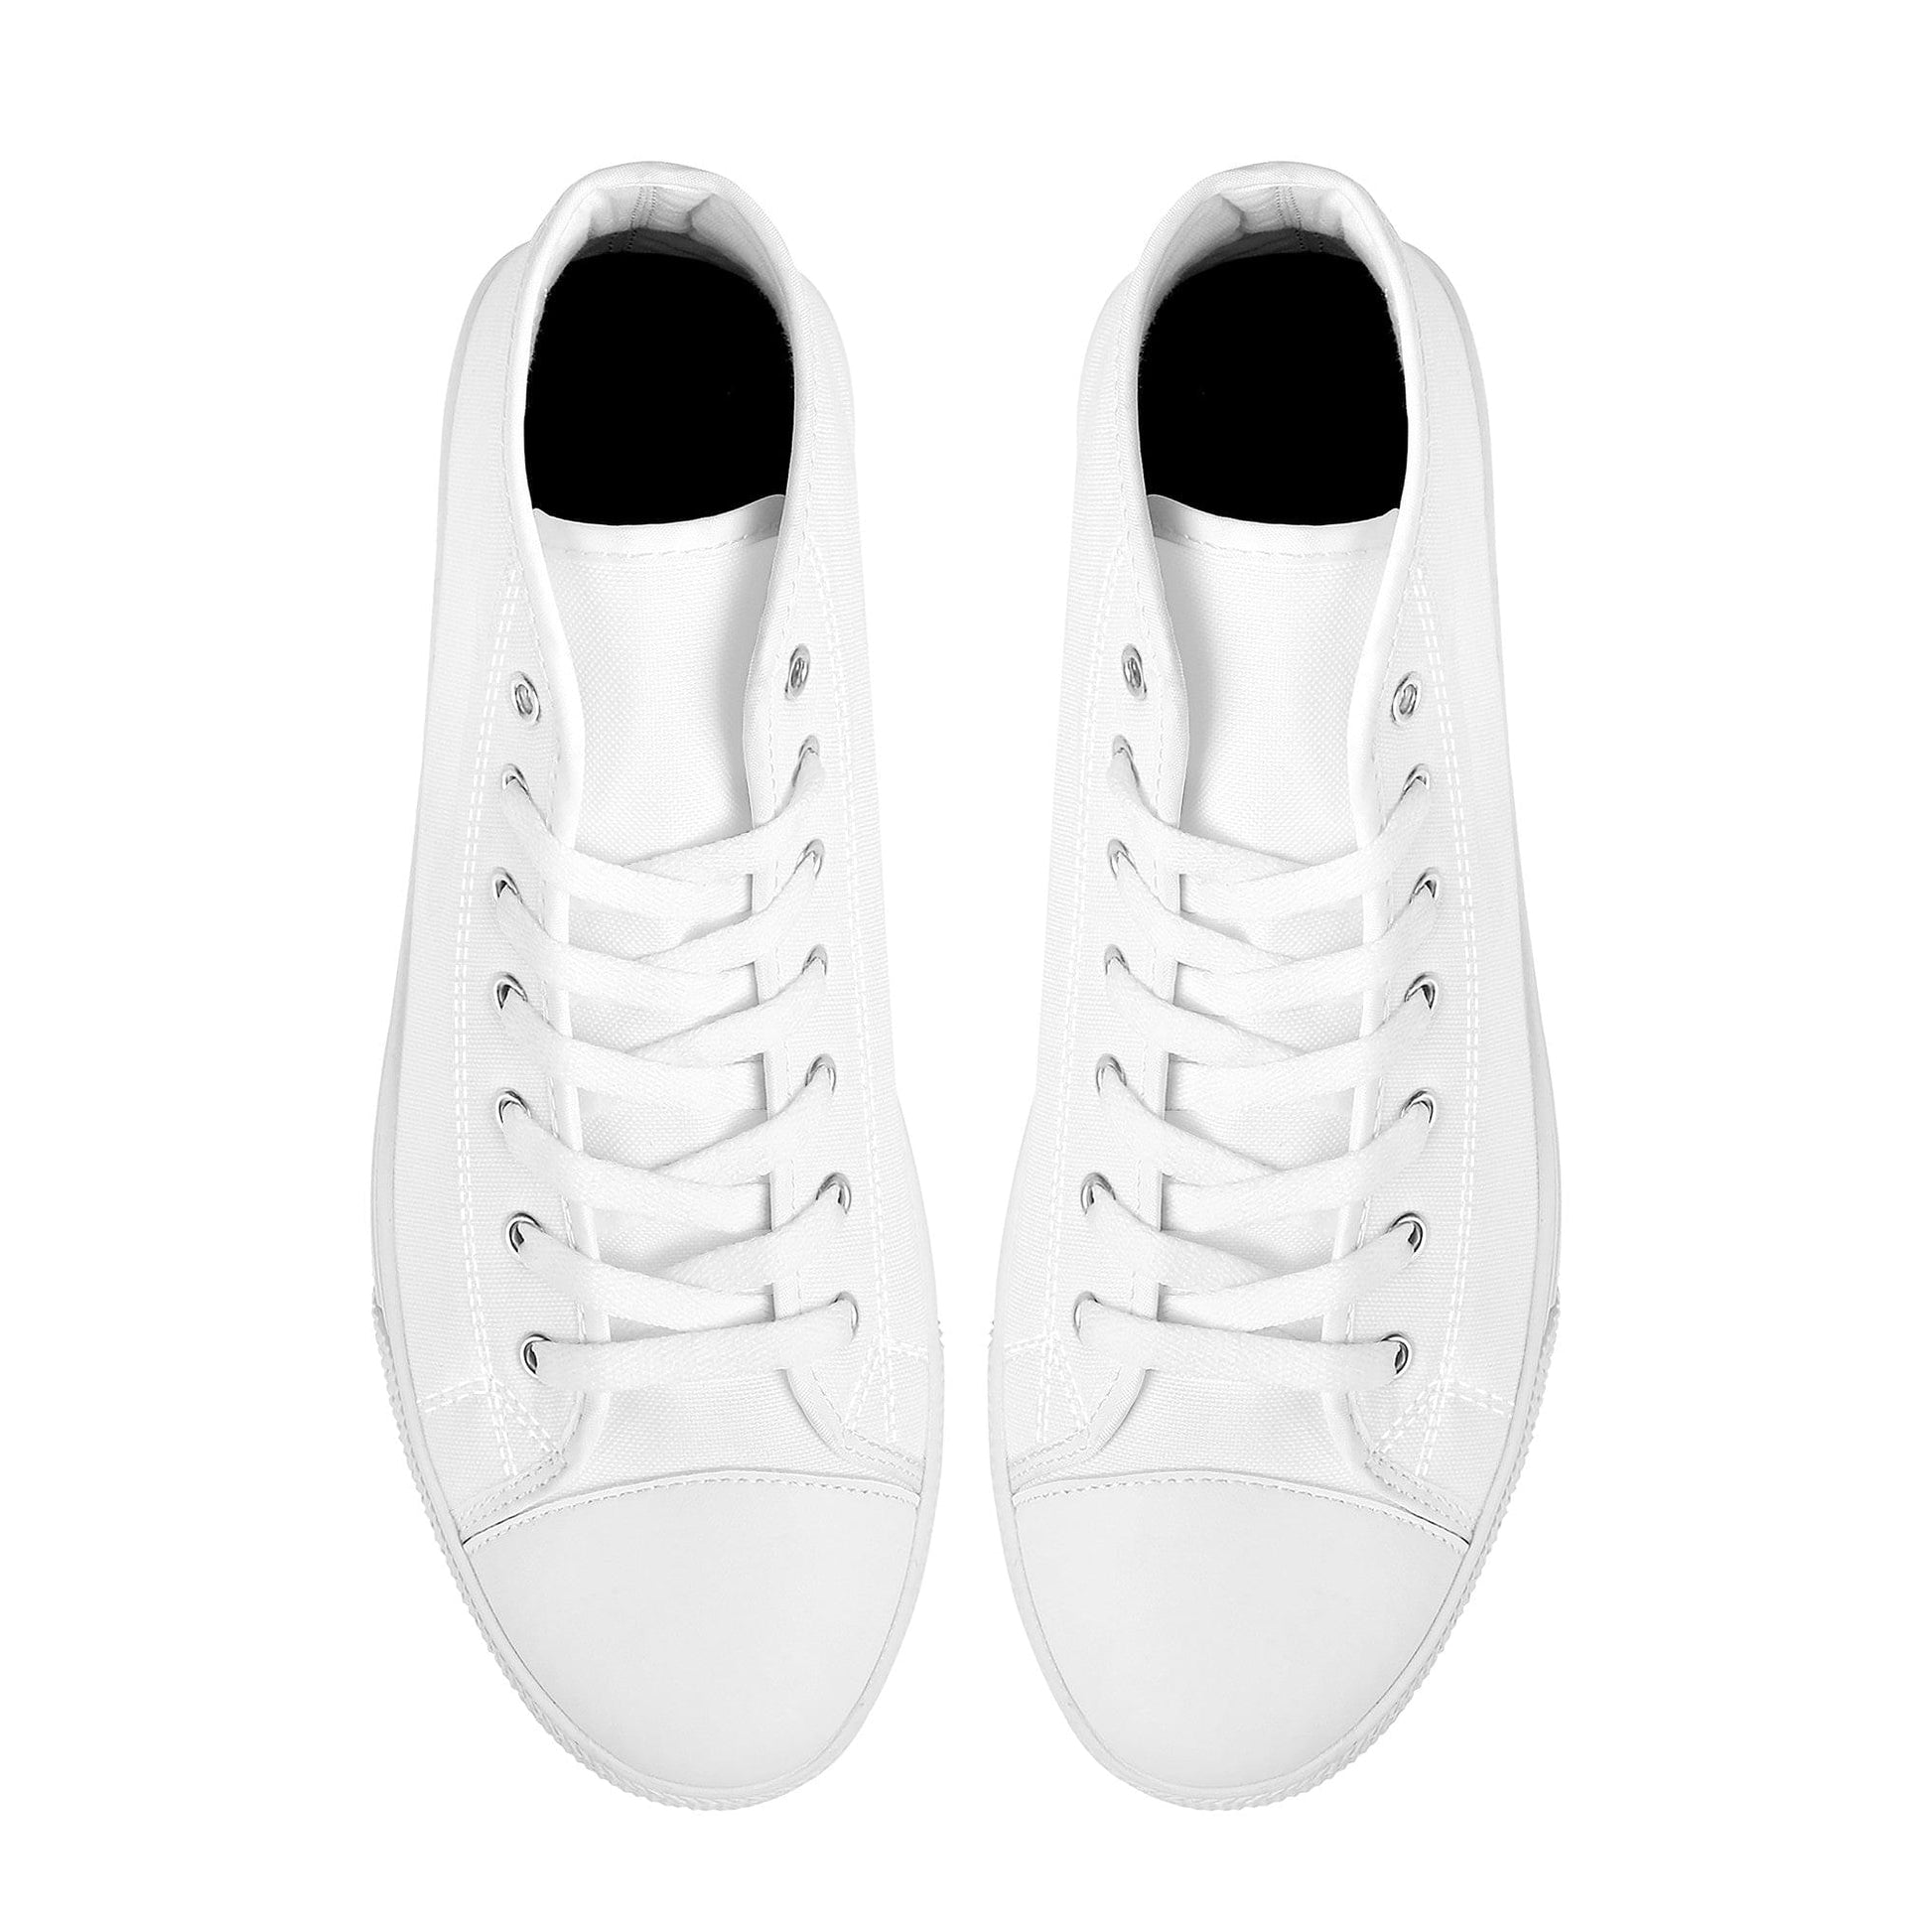 Custom High Top Canvas Shoes- White FWS Colloid Colors 